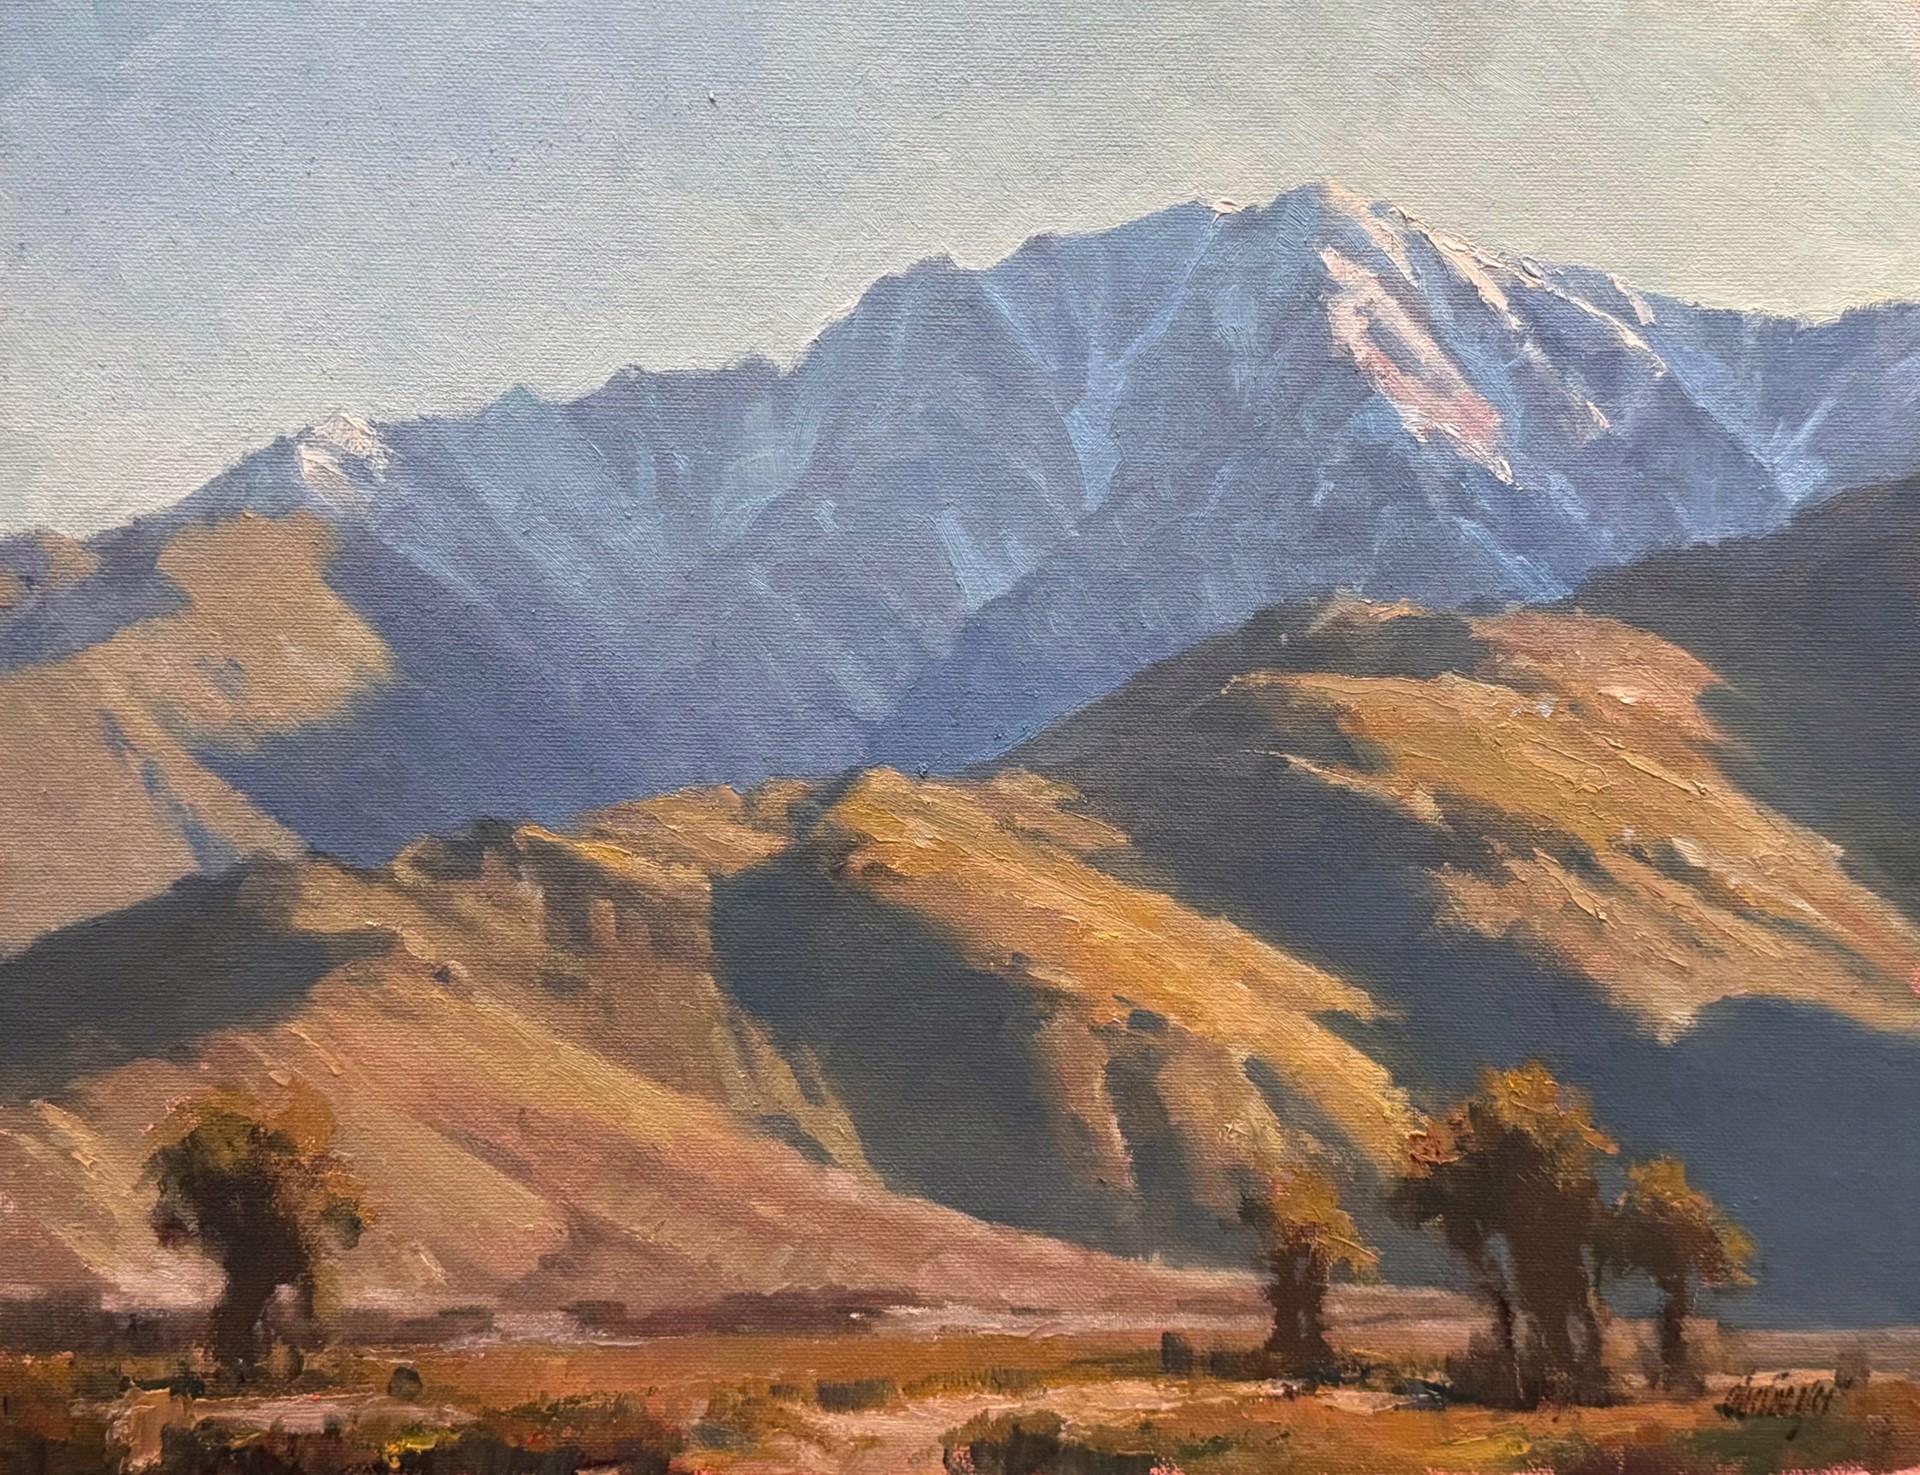 Mt. San Jacinto by Michael Obermeyer